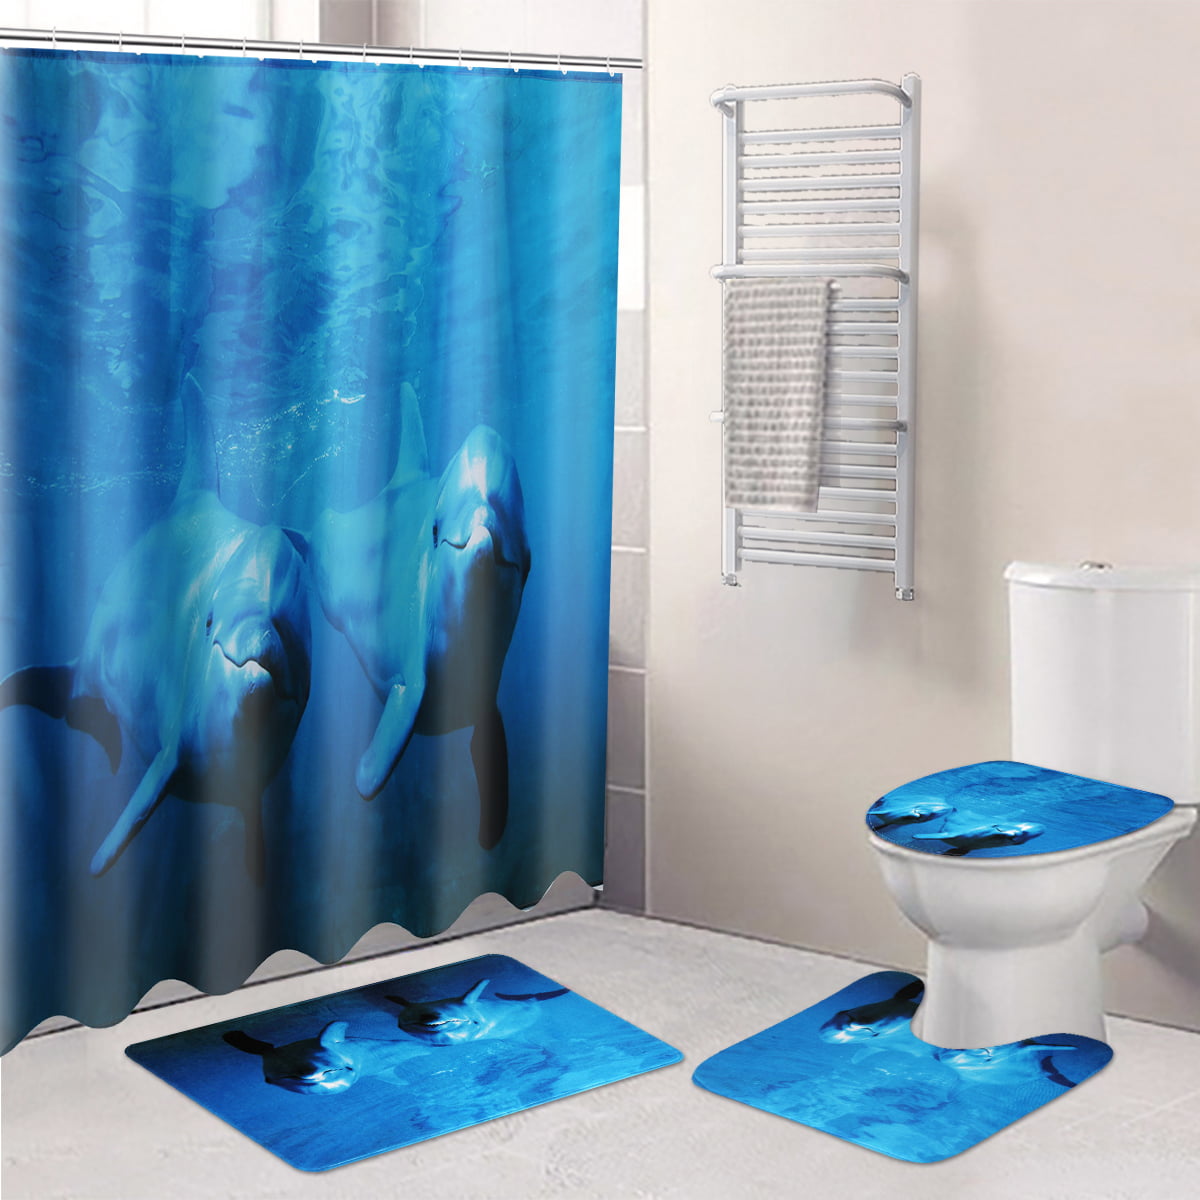 Sea Dolphins Waterproof Bathroom Polyester Shower Curtain Liner Water Resistant 